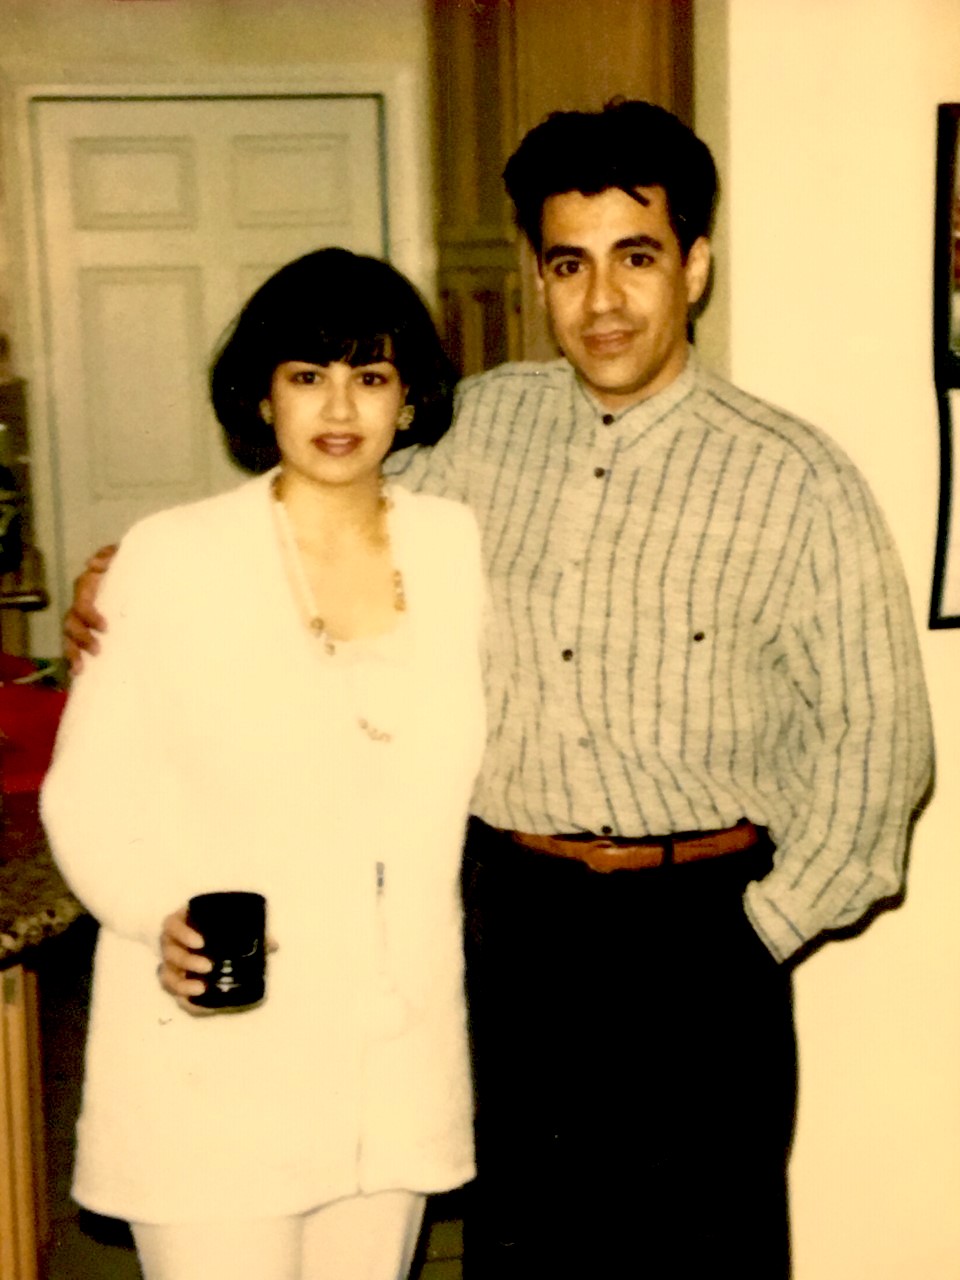 Joey Terrill and sister Linda Terrill, circa 1990.